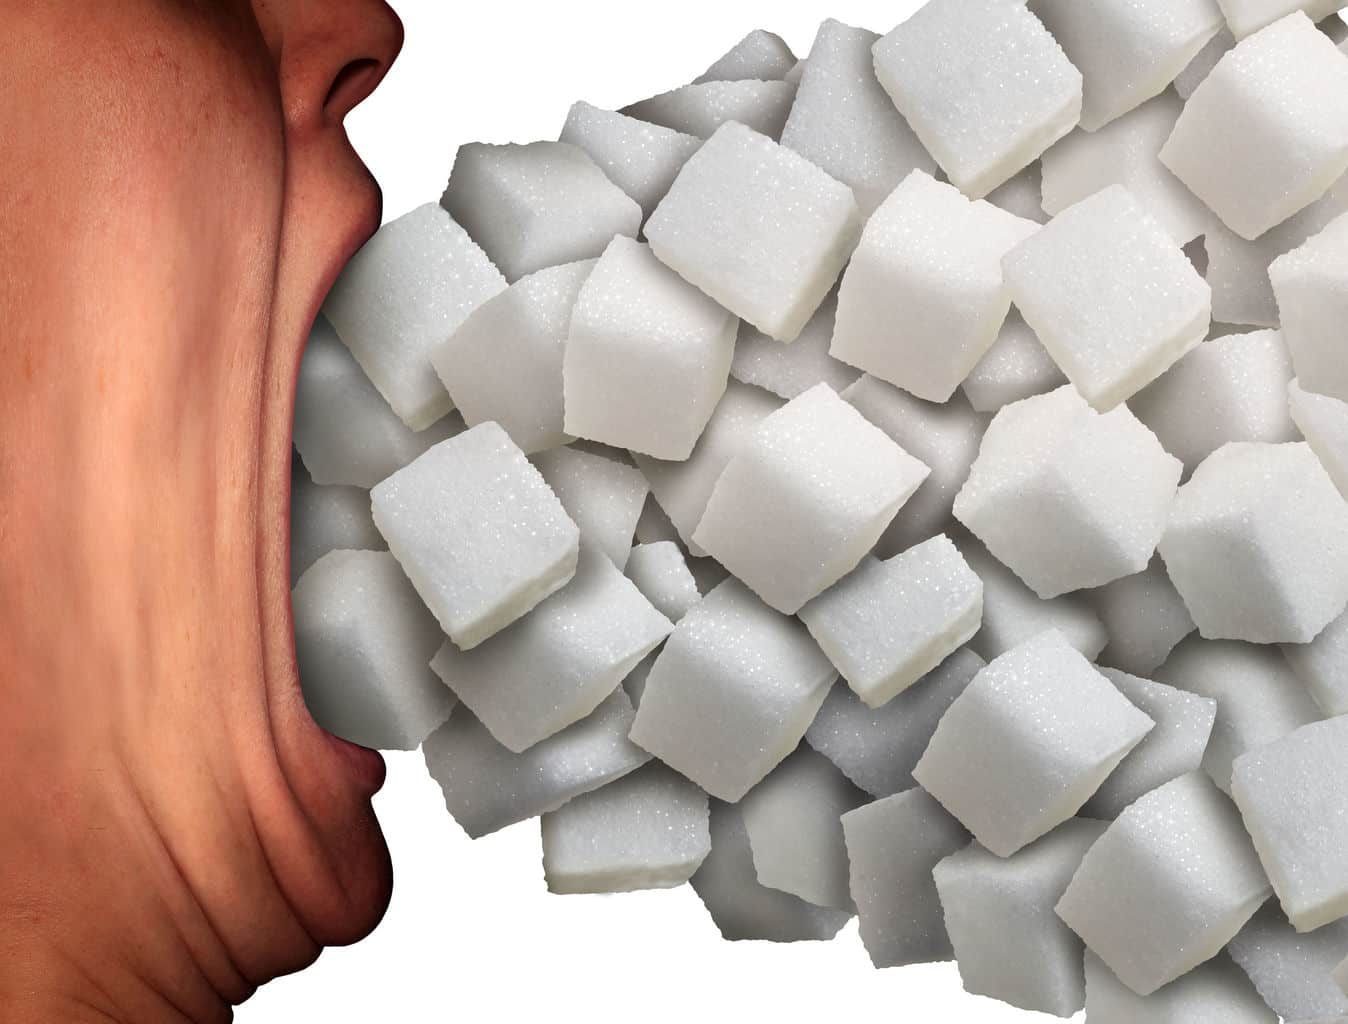 The sugar and cancer myth